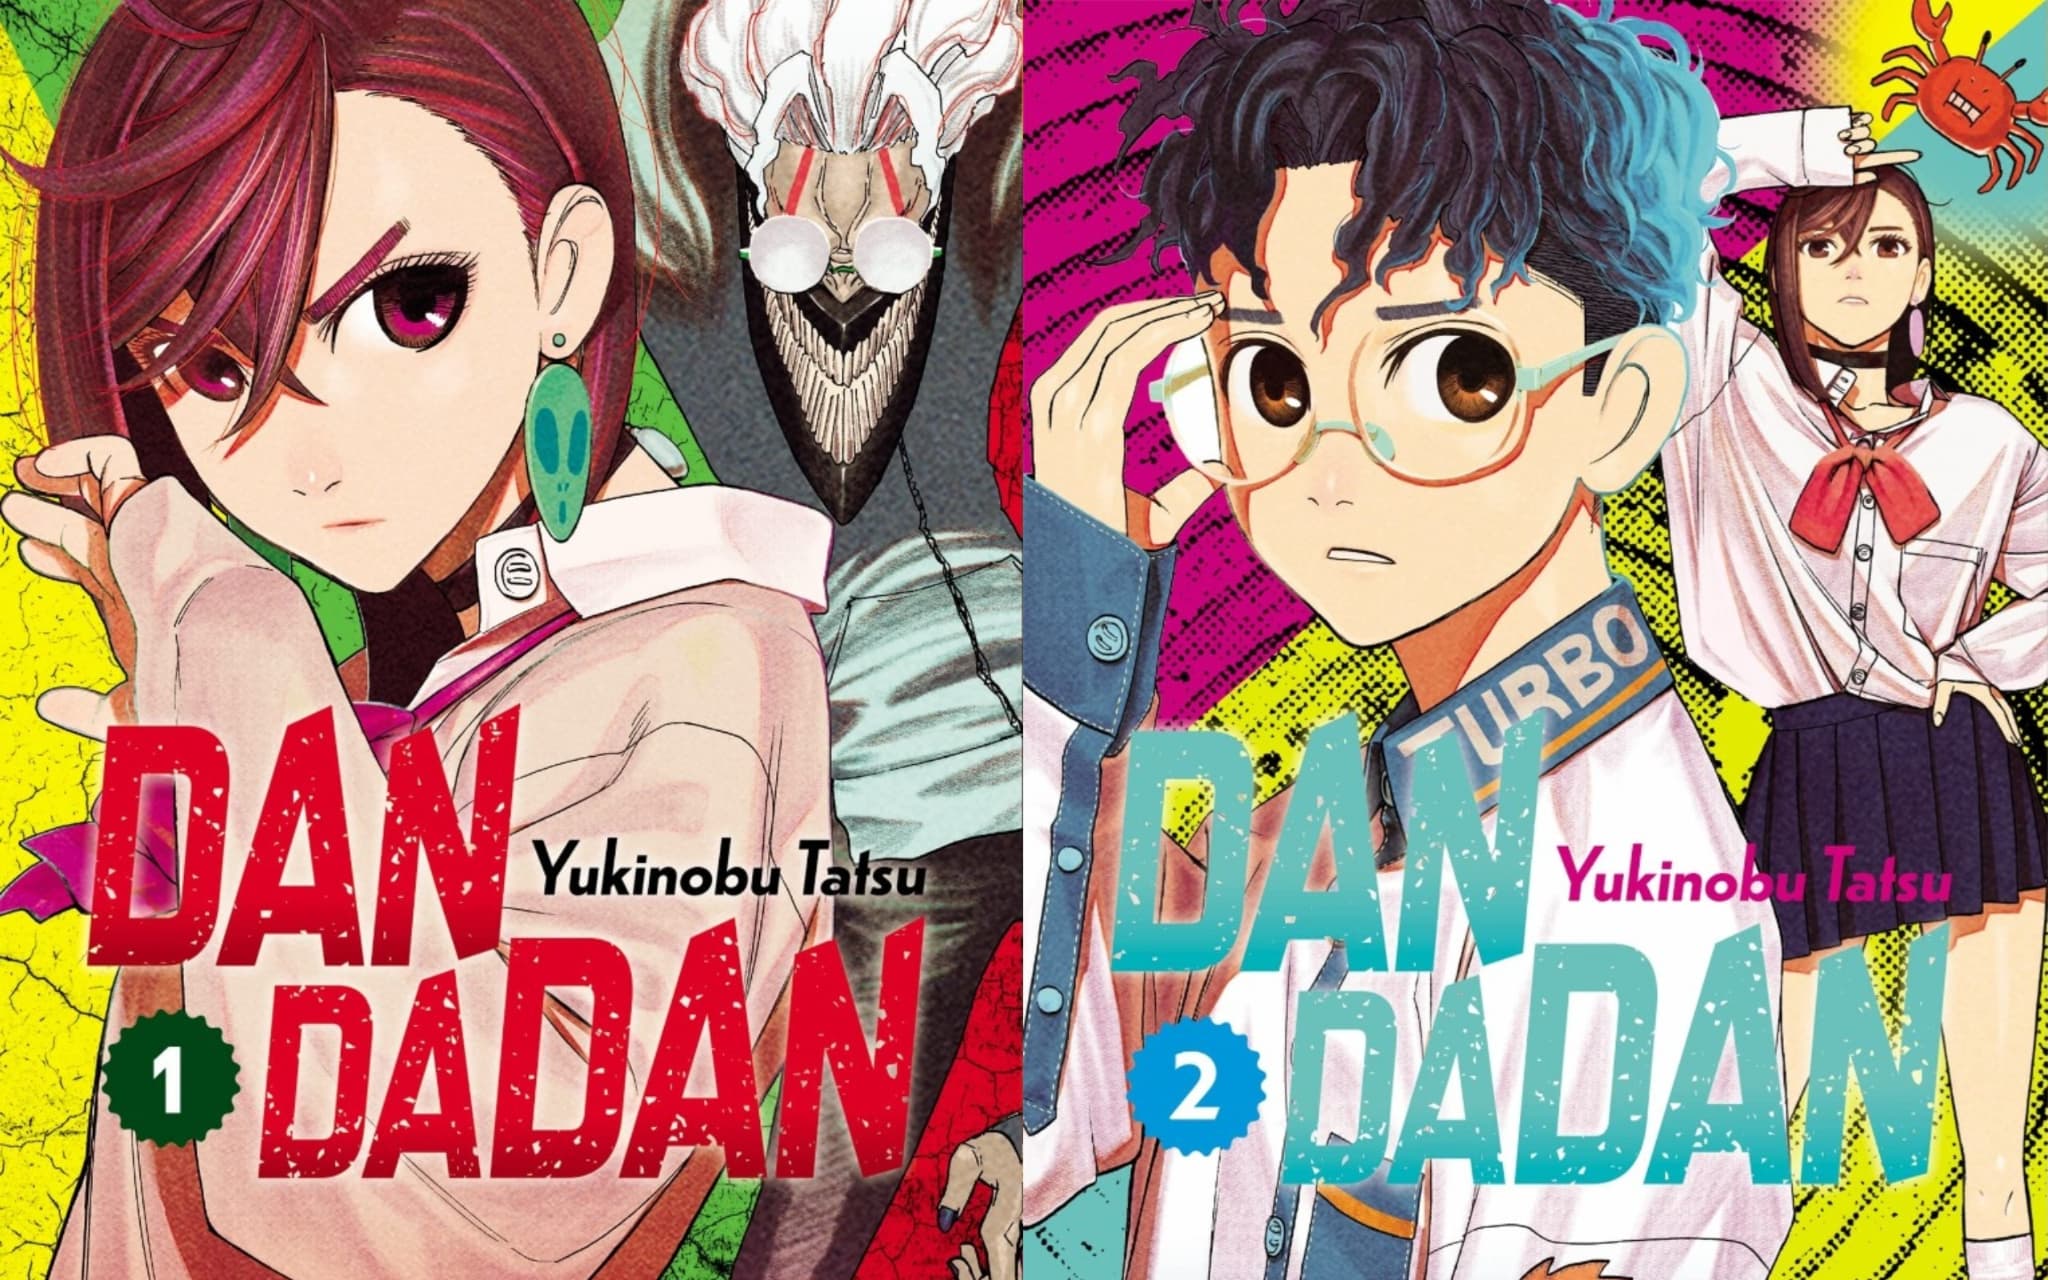 Meilleurs cadeaux manga/anime à offrir pour Noël - Club Otaku